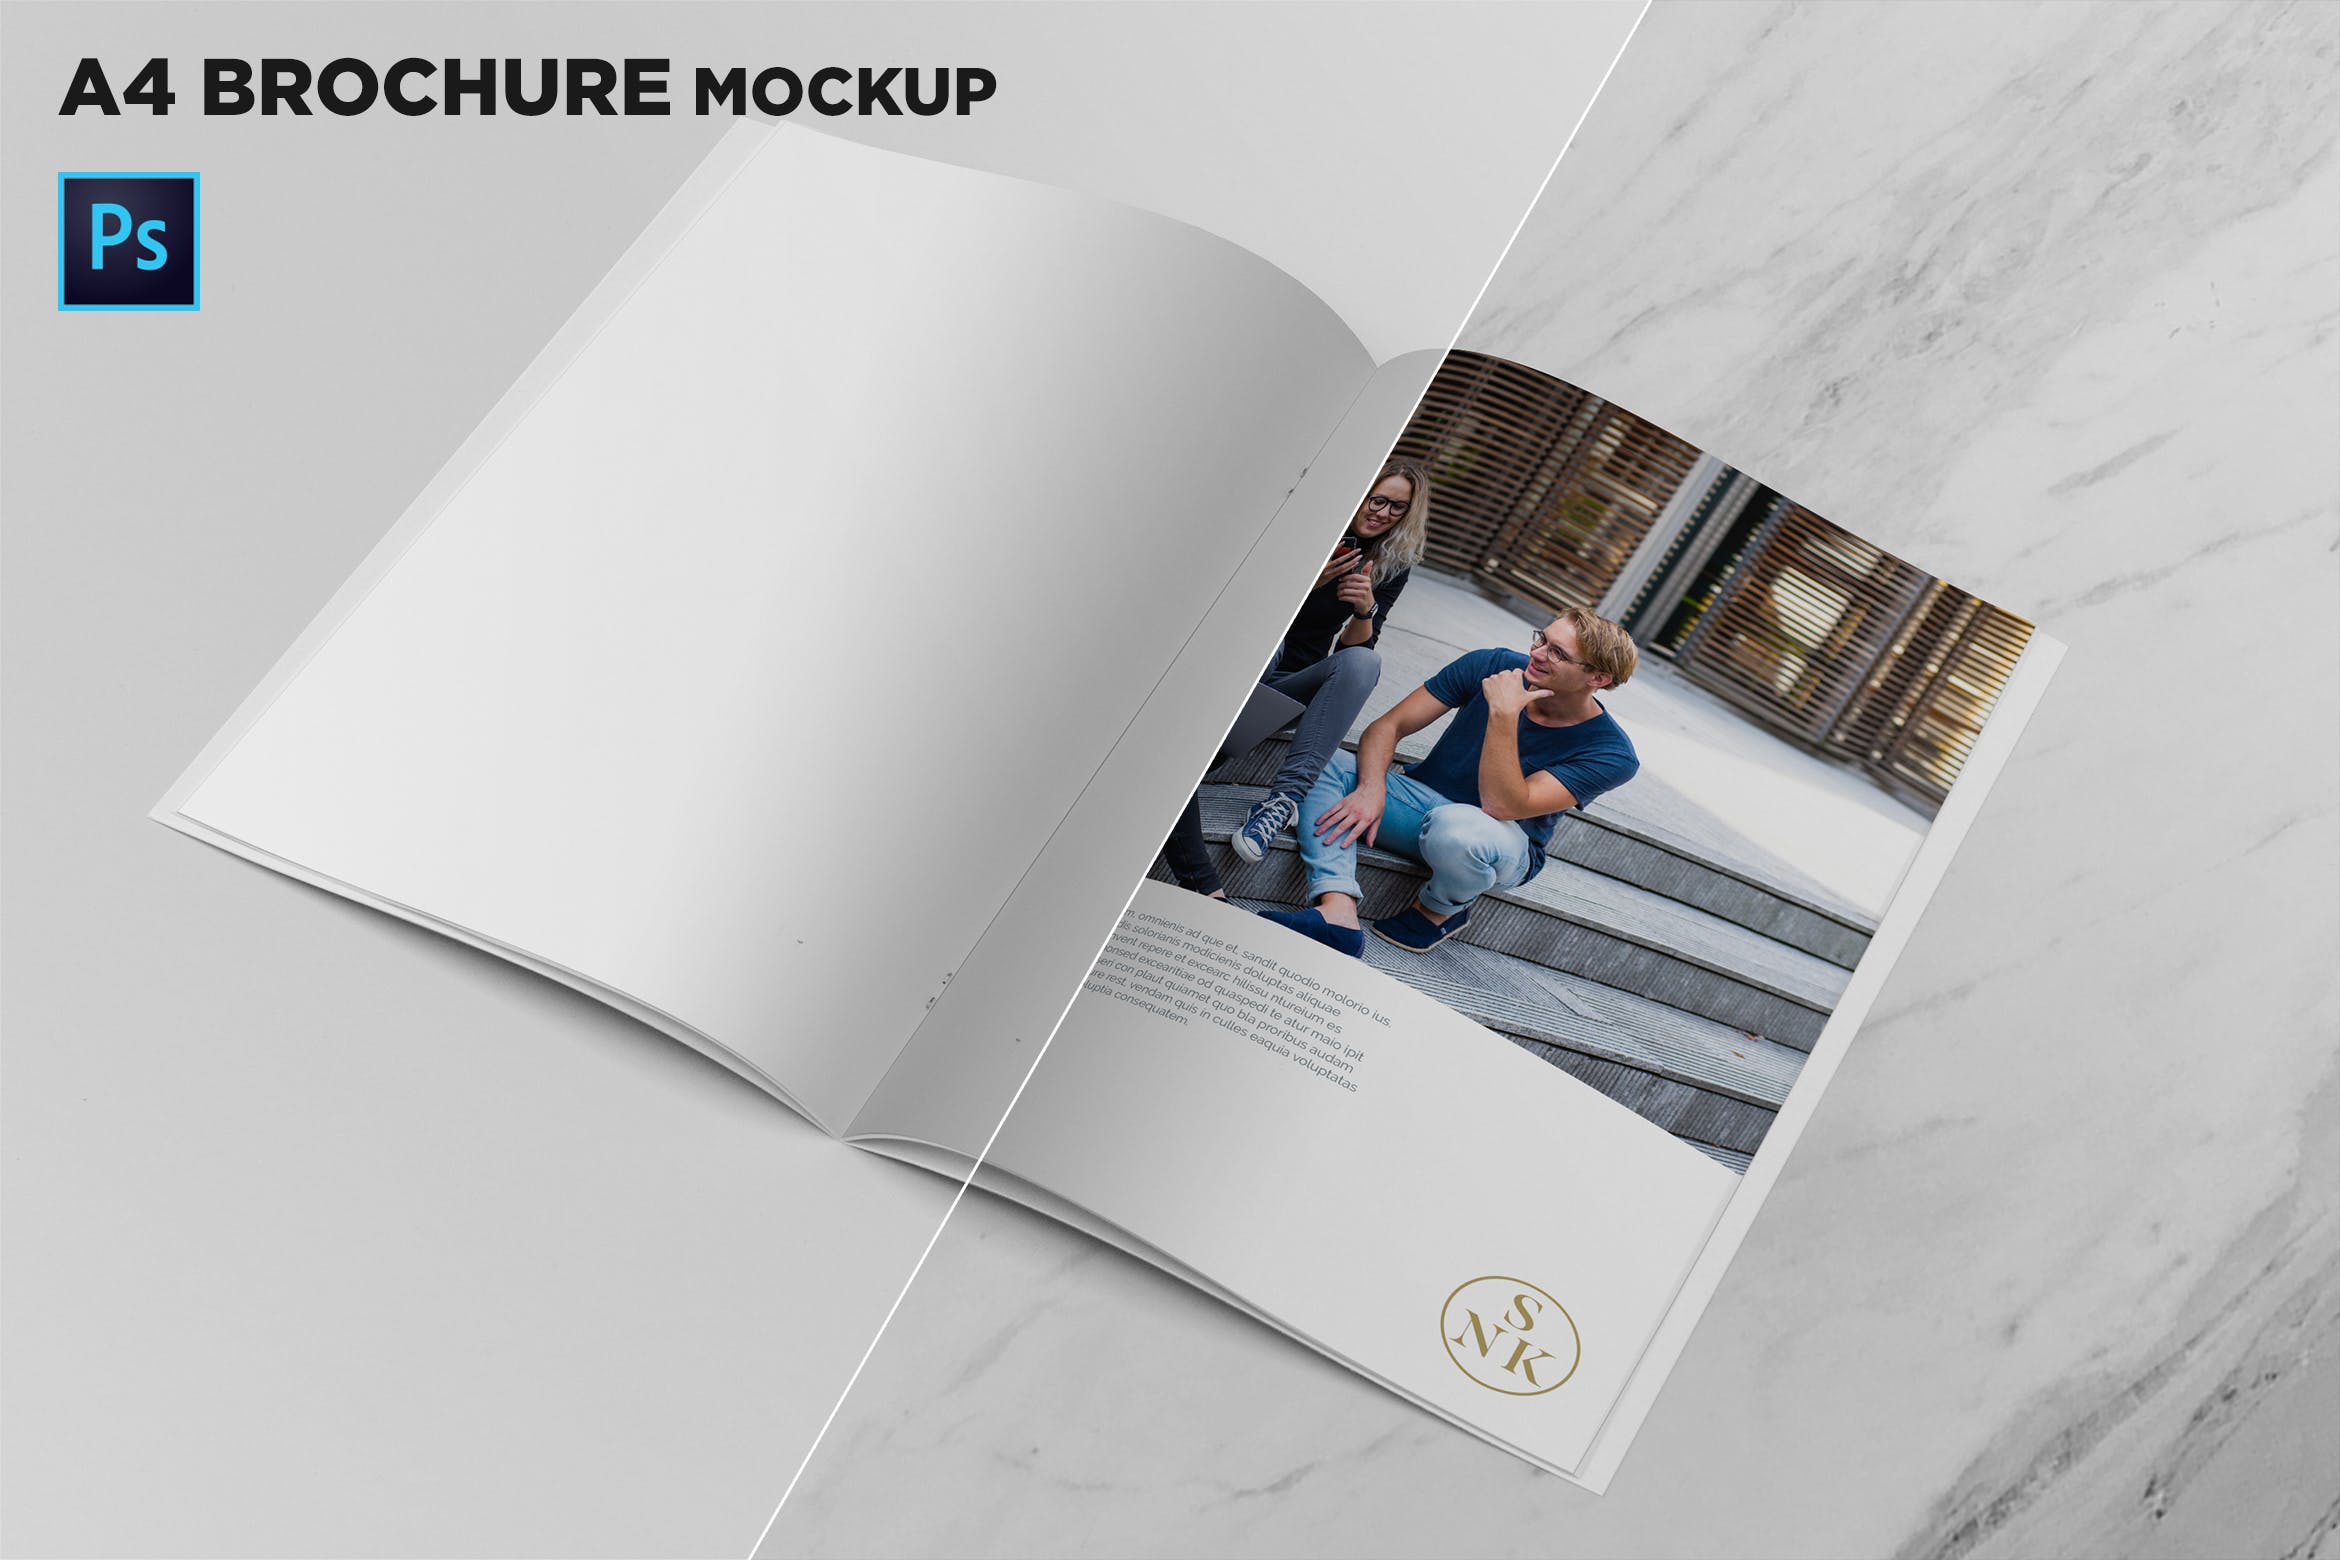 A4宣传小册子/企业画册内页排版设计效果图样机非凡图库精选 A4 Brochure Mockup Open Pages插图